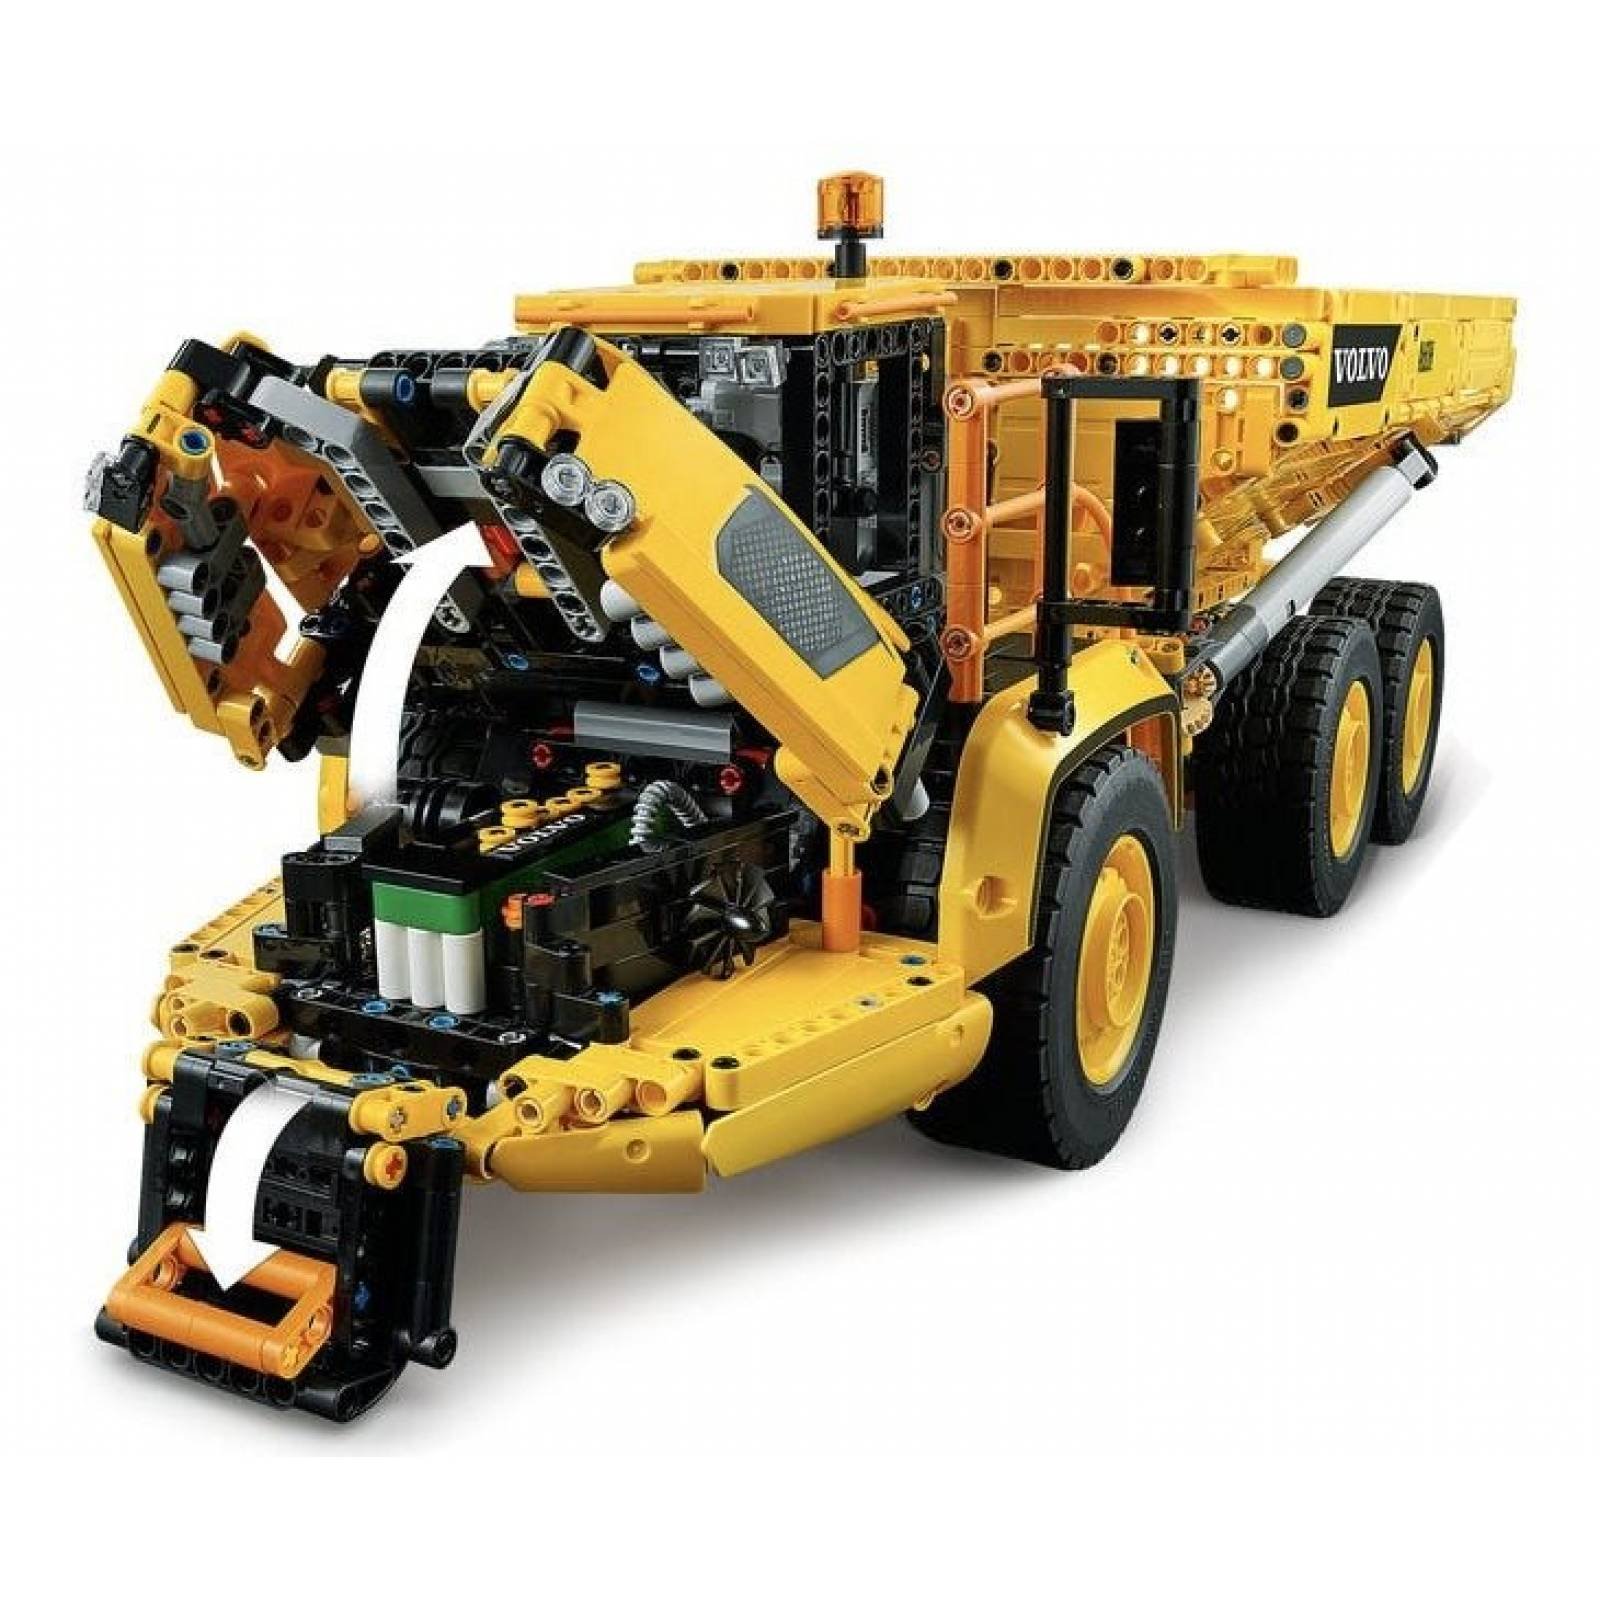 Lego 42114 Dumper Articulado Volvo 6x6 App Technic